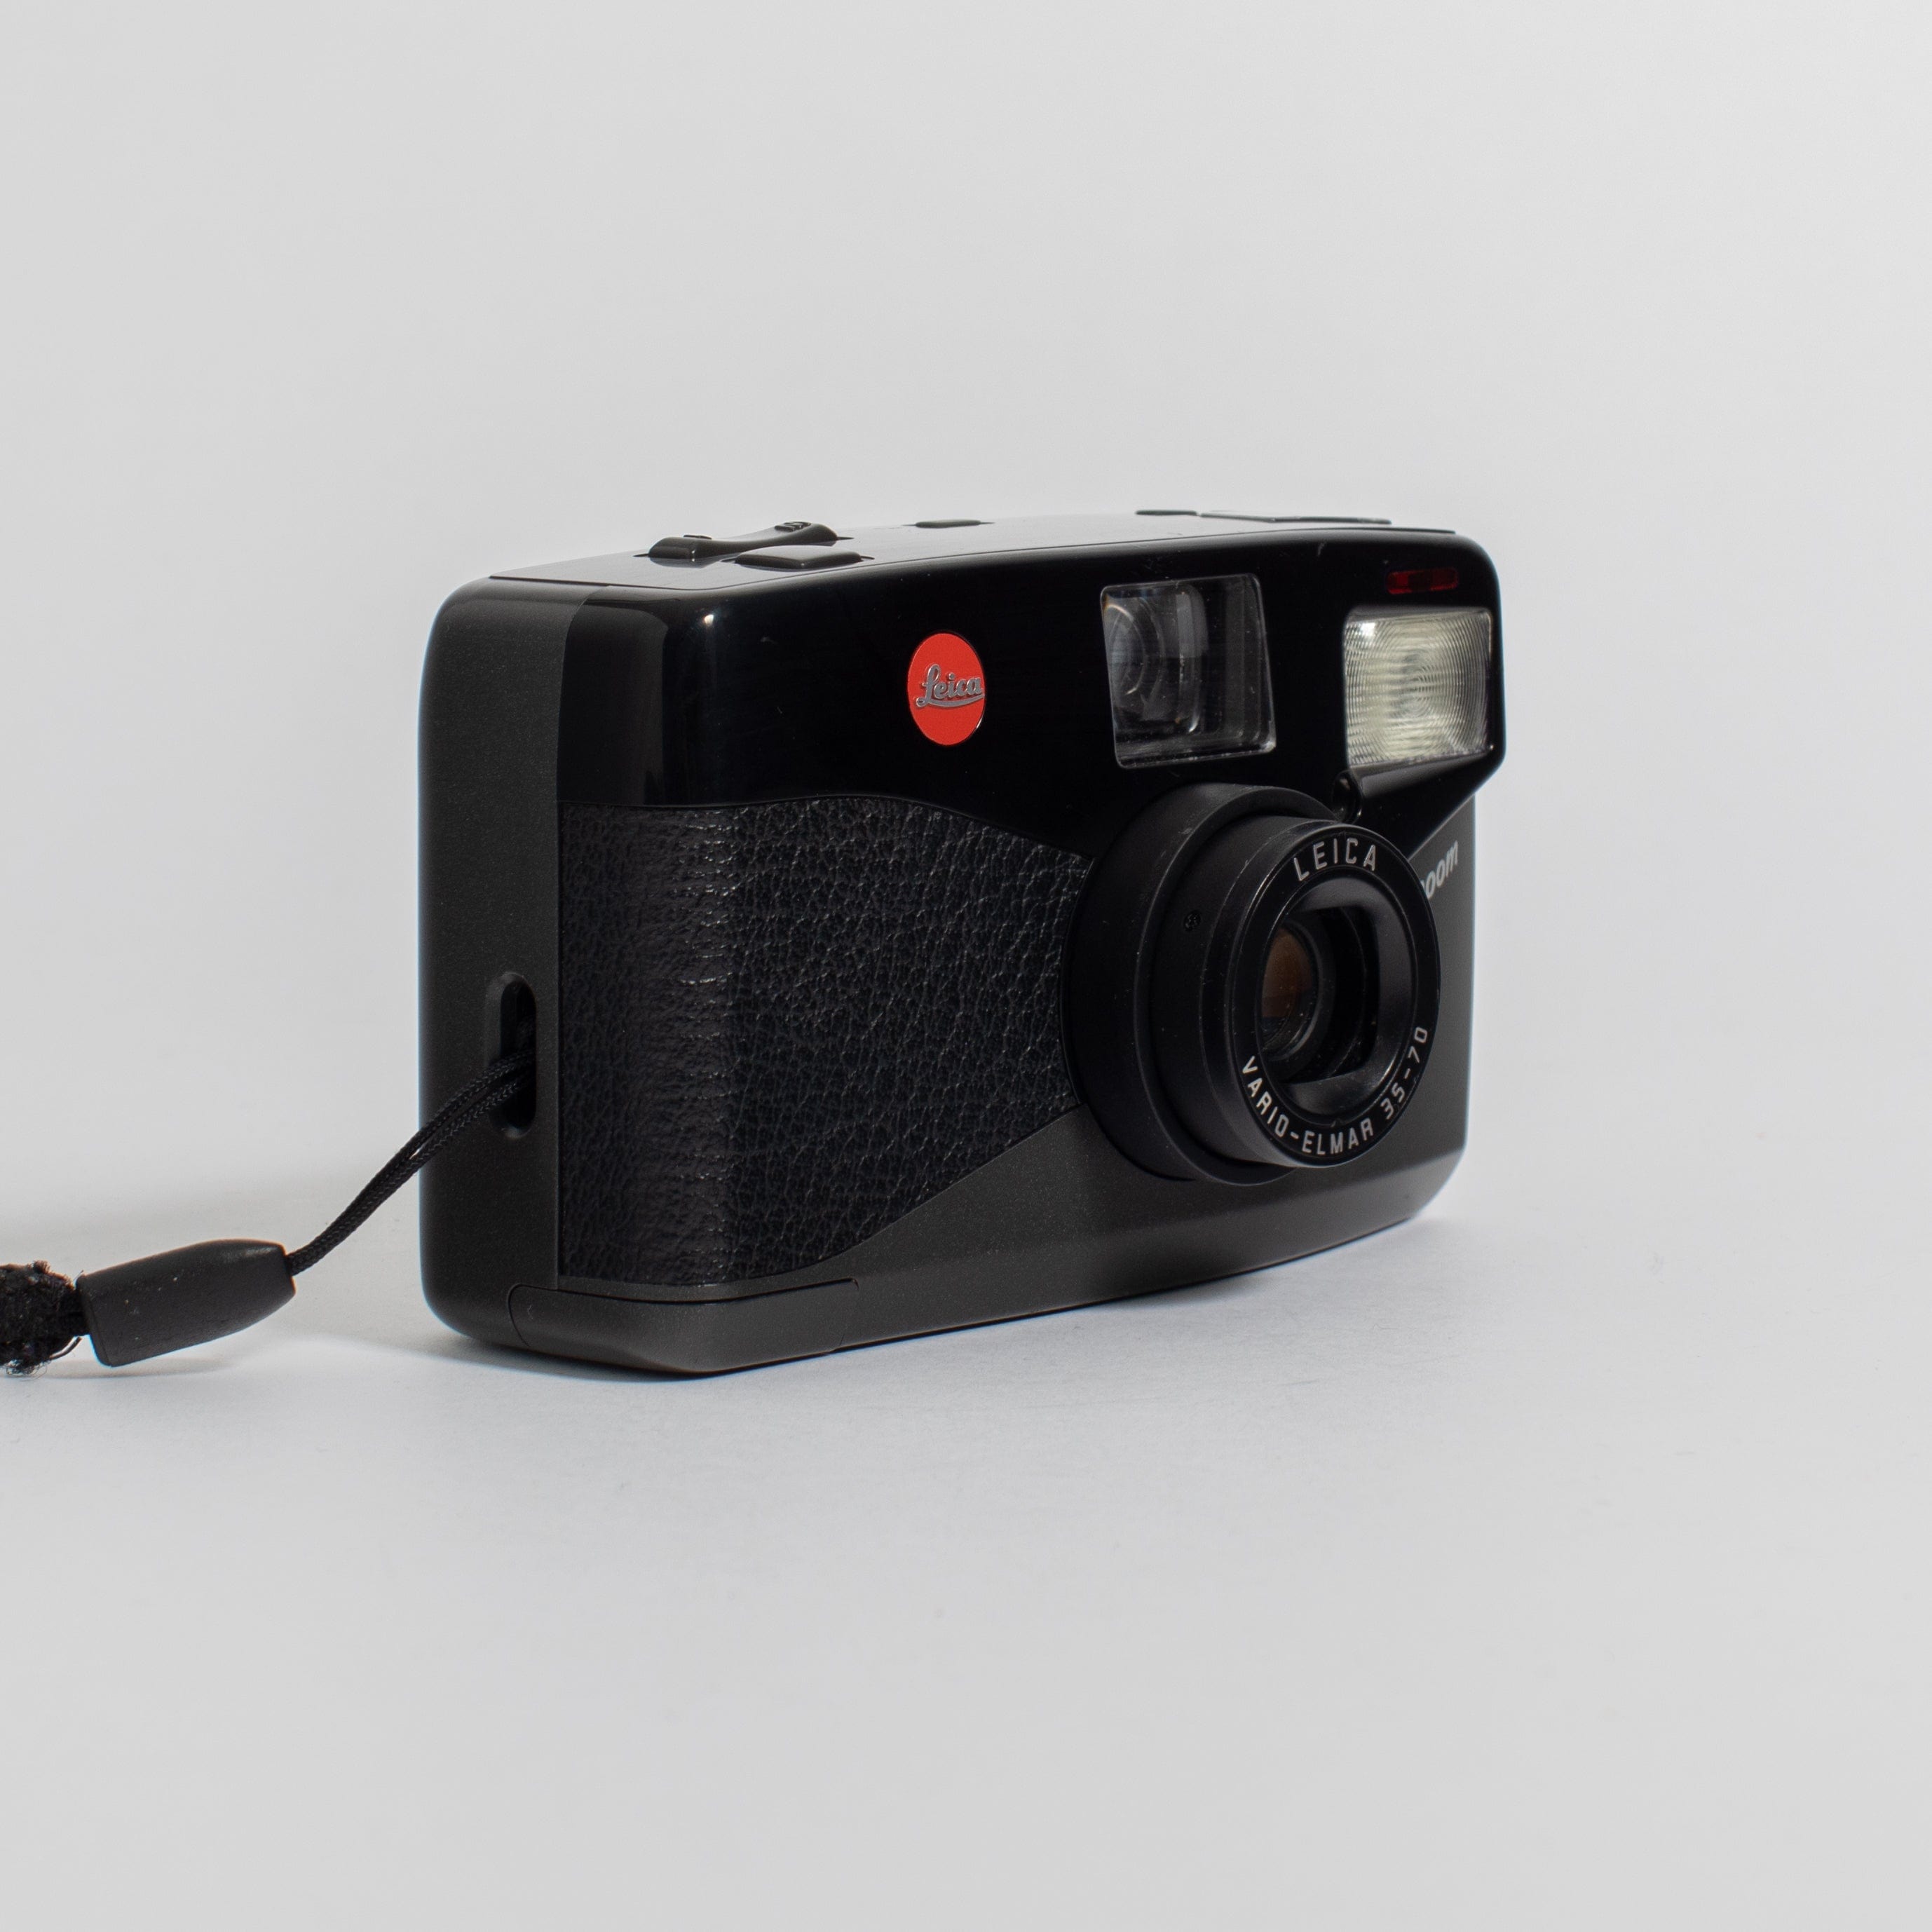 Leica ライカ mini zoom VARIO-ELMAR 35-70mm動作問題なく良好です